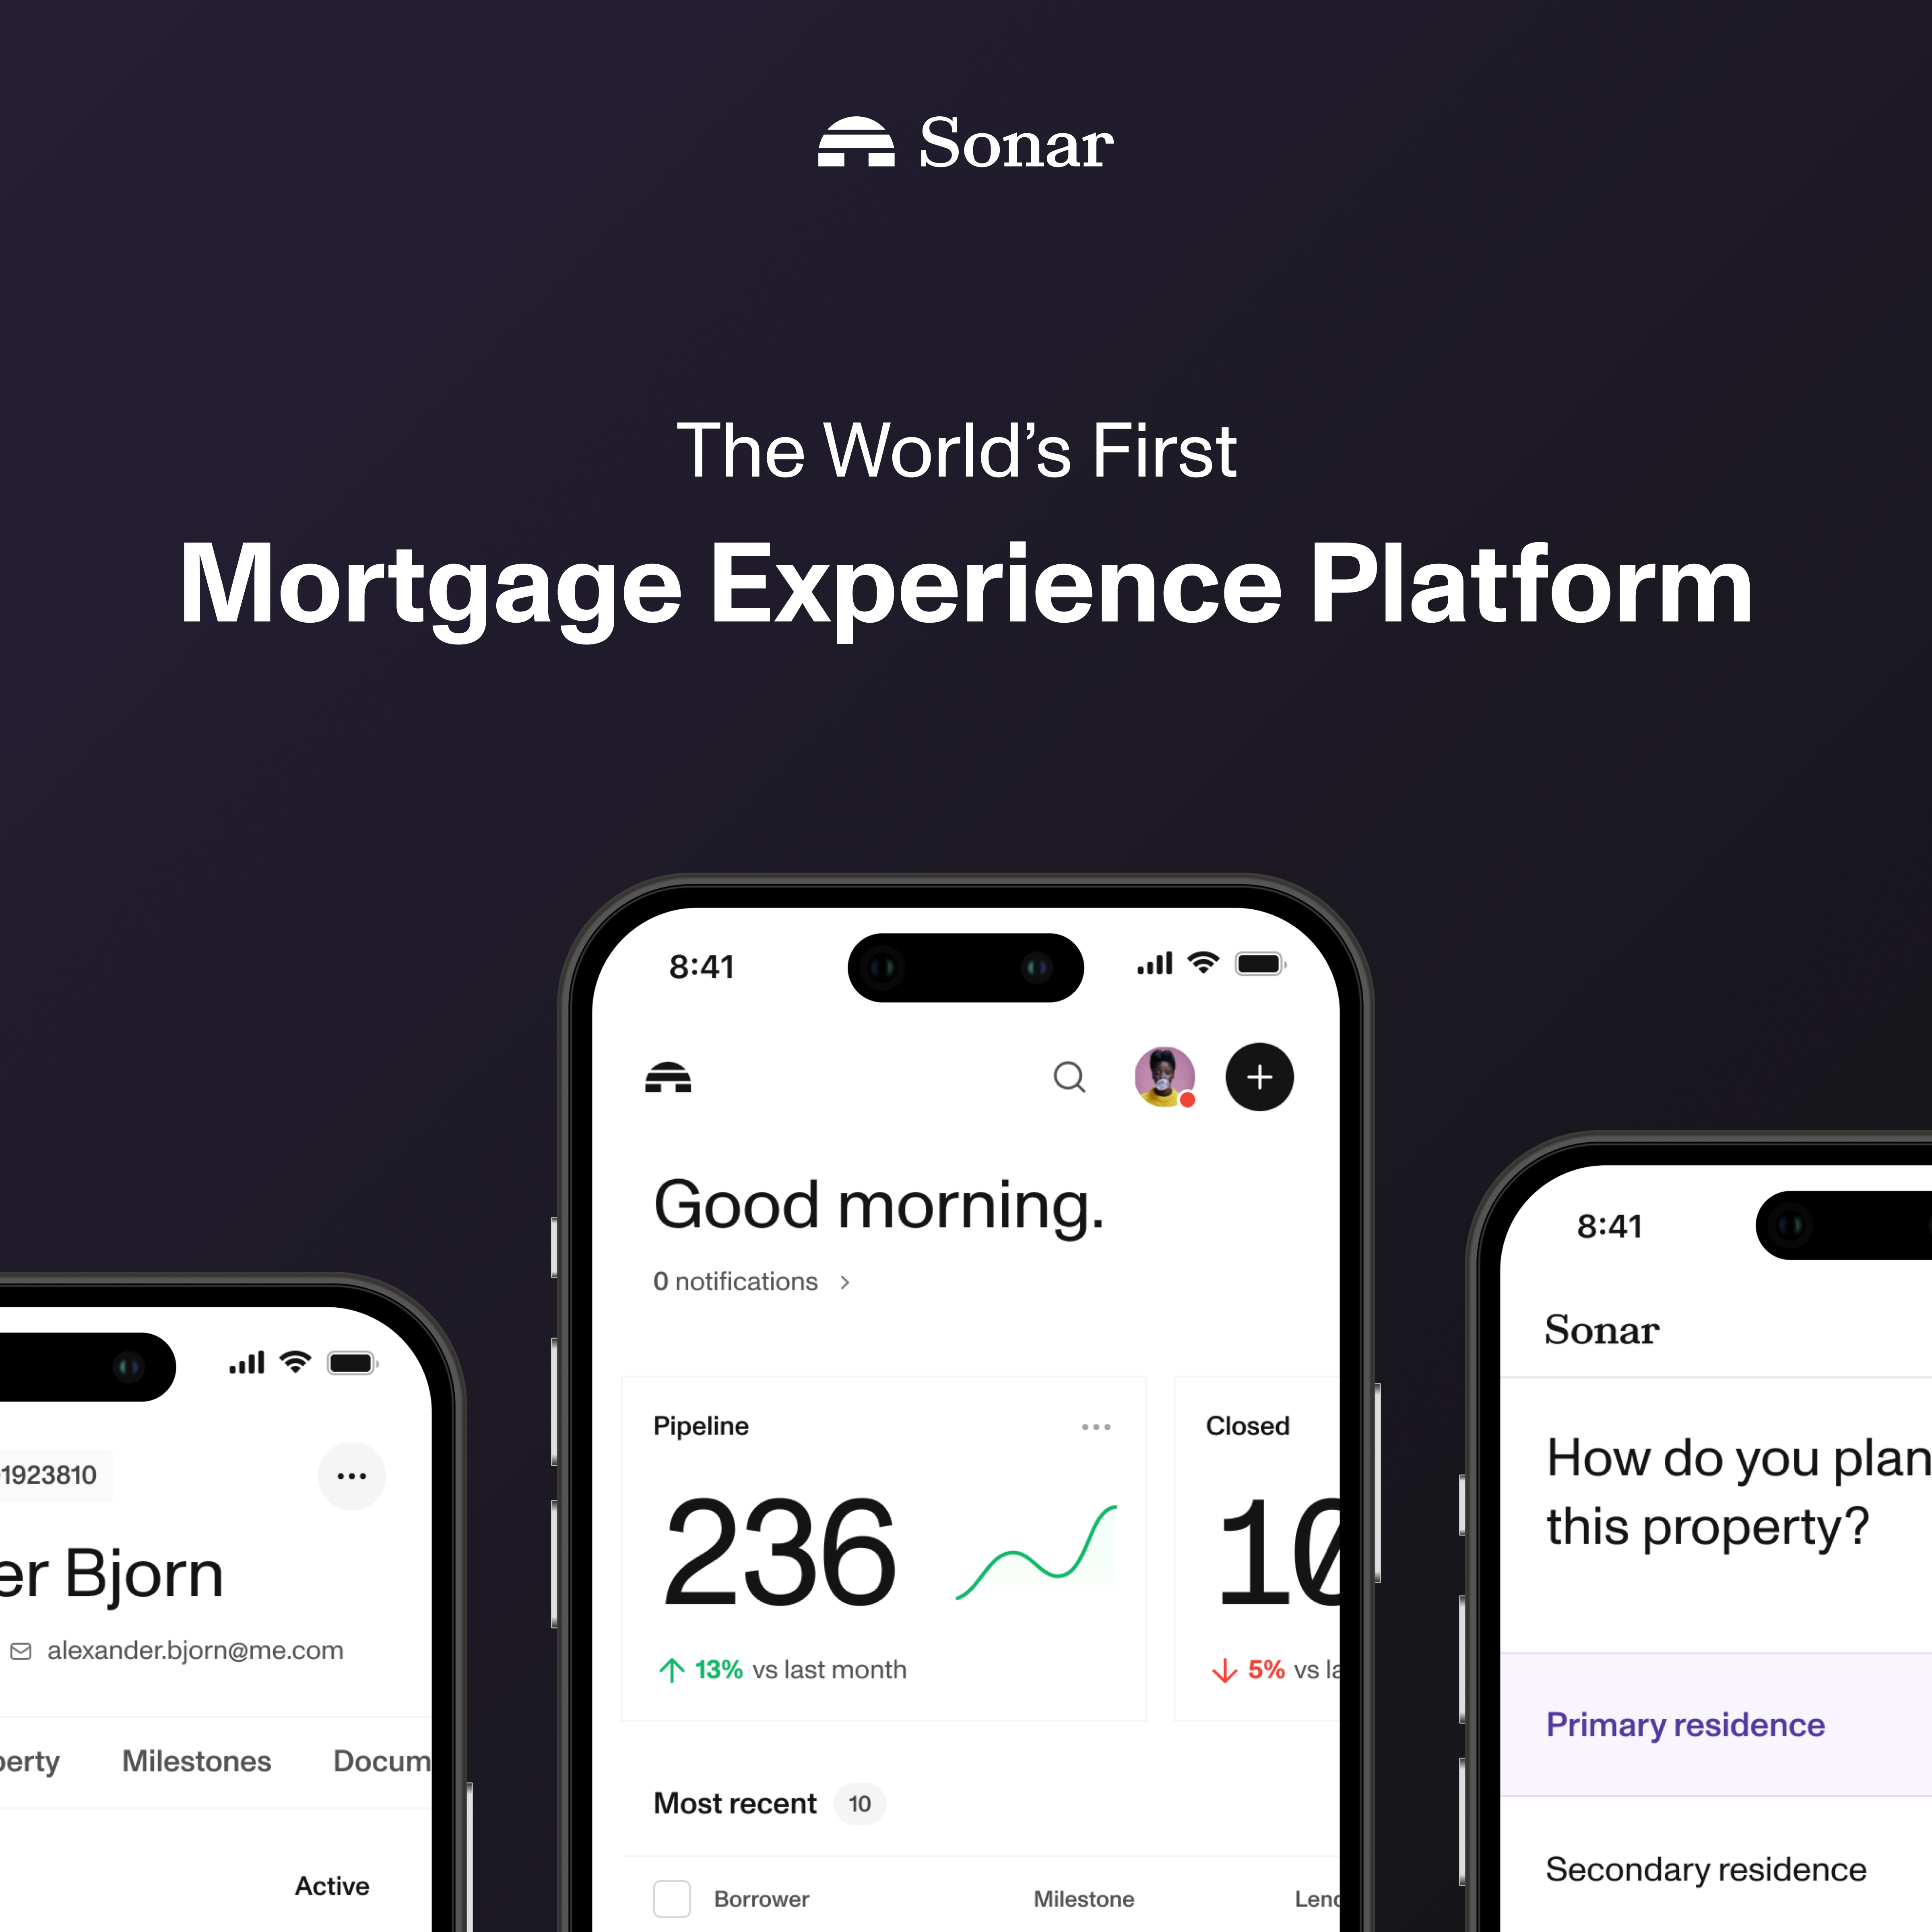 Sonar Mortgage Experience Platform